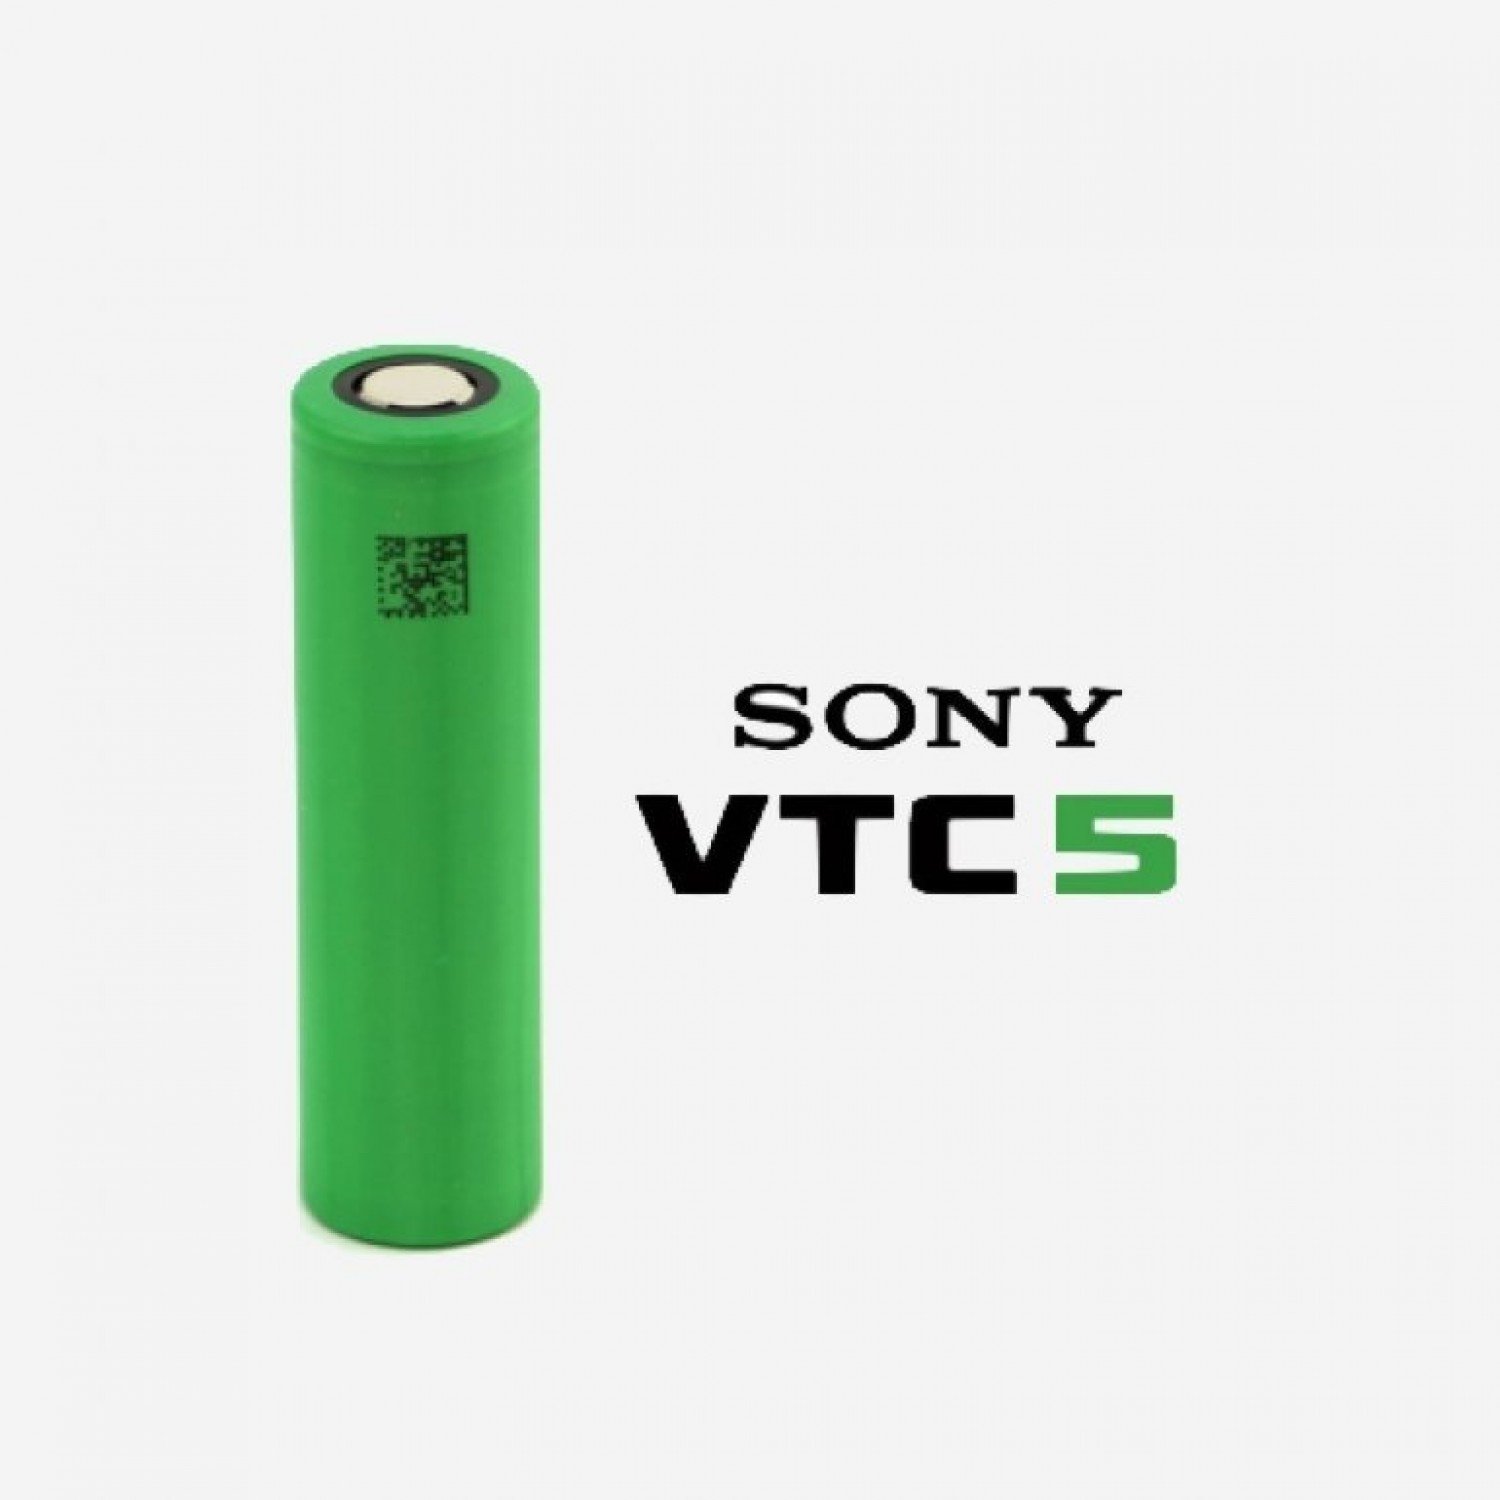 Sony Vtc 5 18650 Elektronik Sigara Pili - 2600 Mah